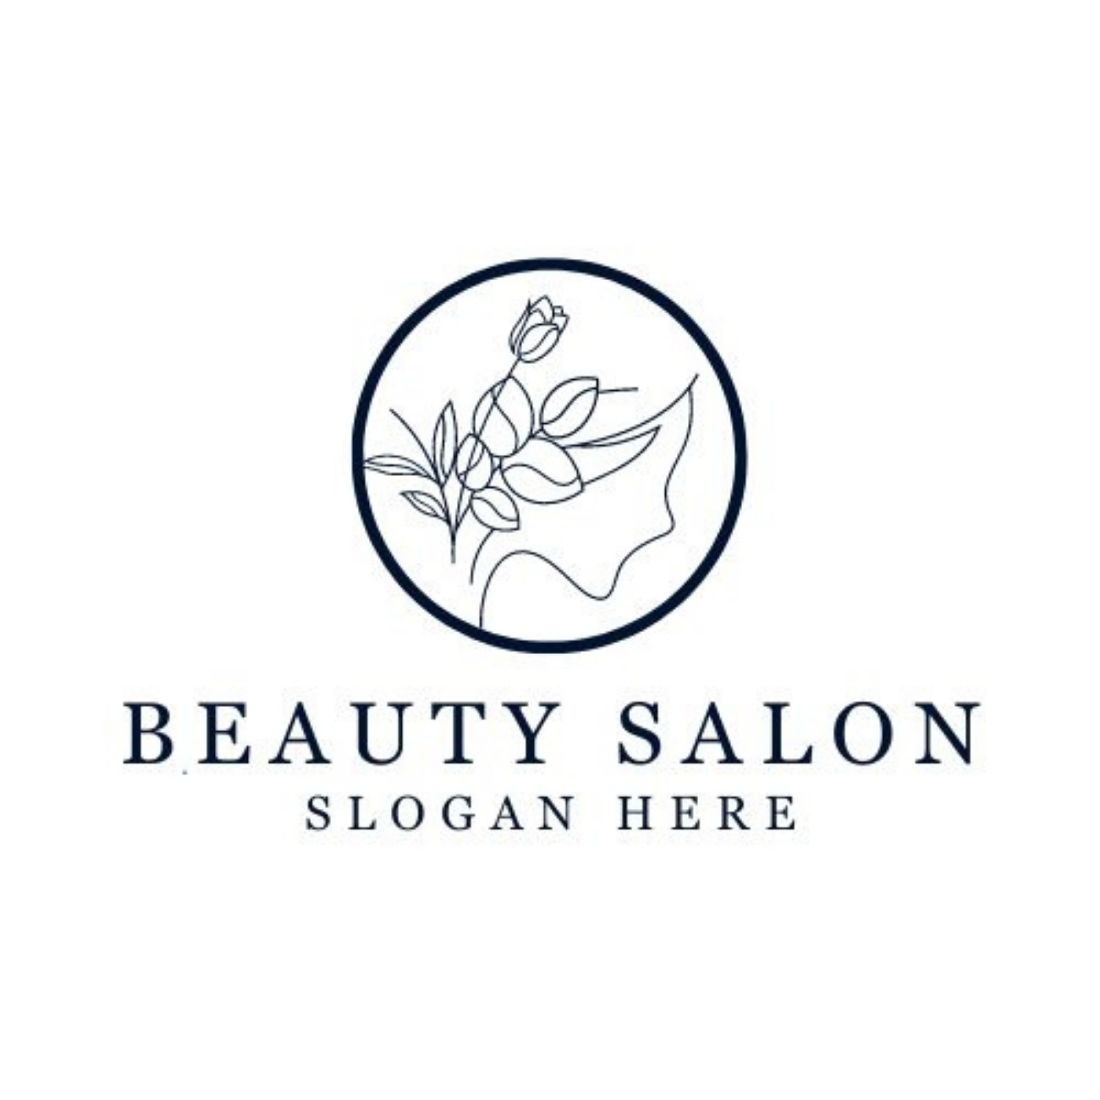 Editable Beauty Salon Logo Template preview image.